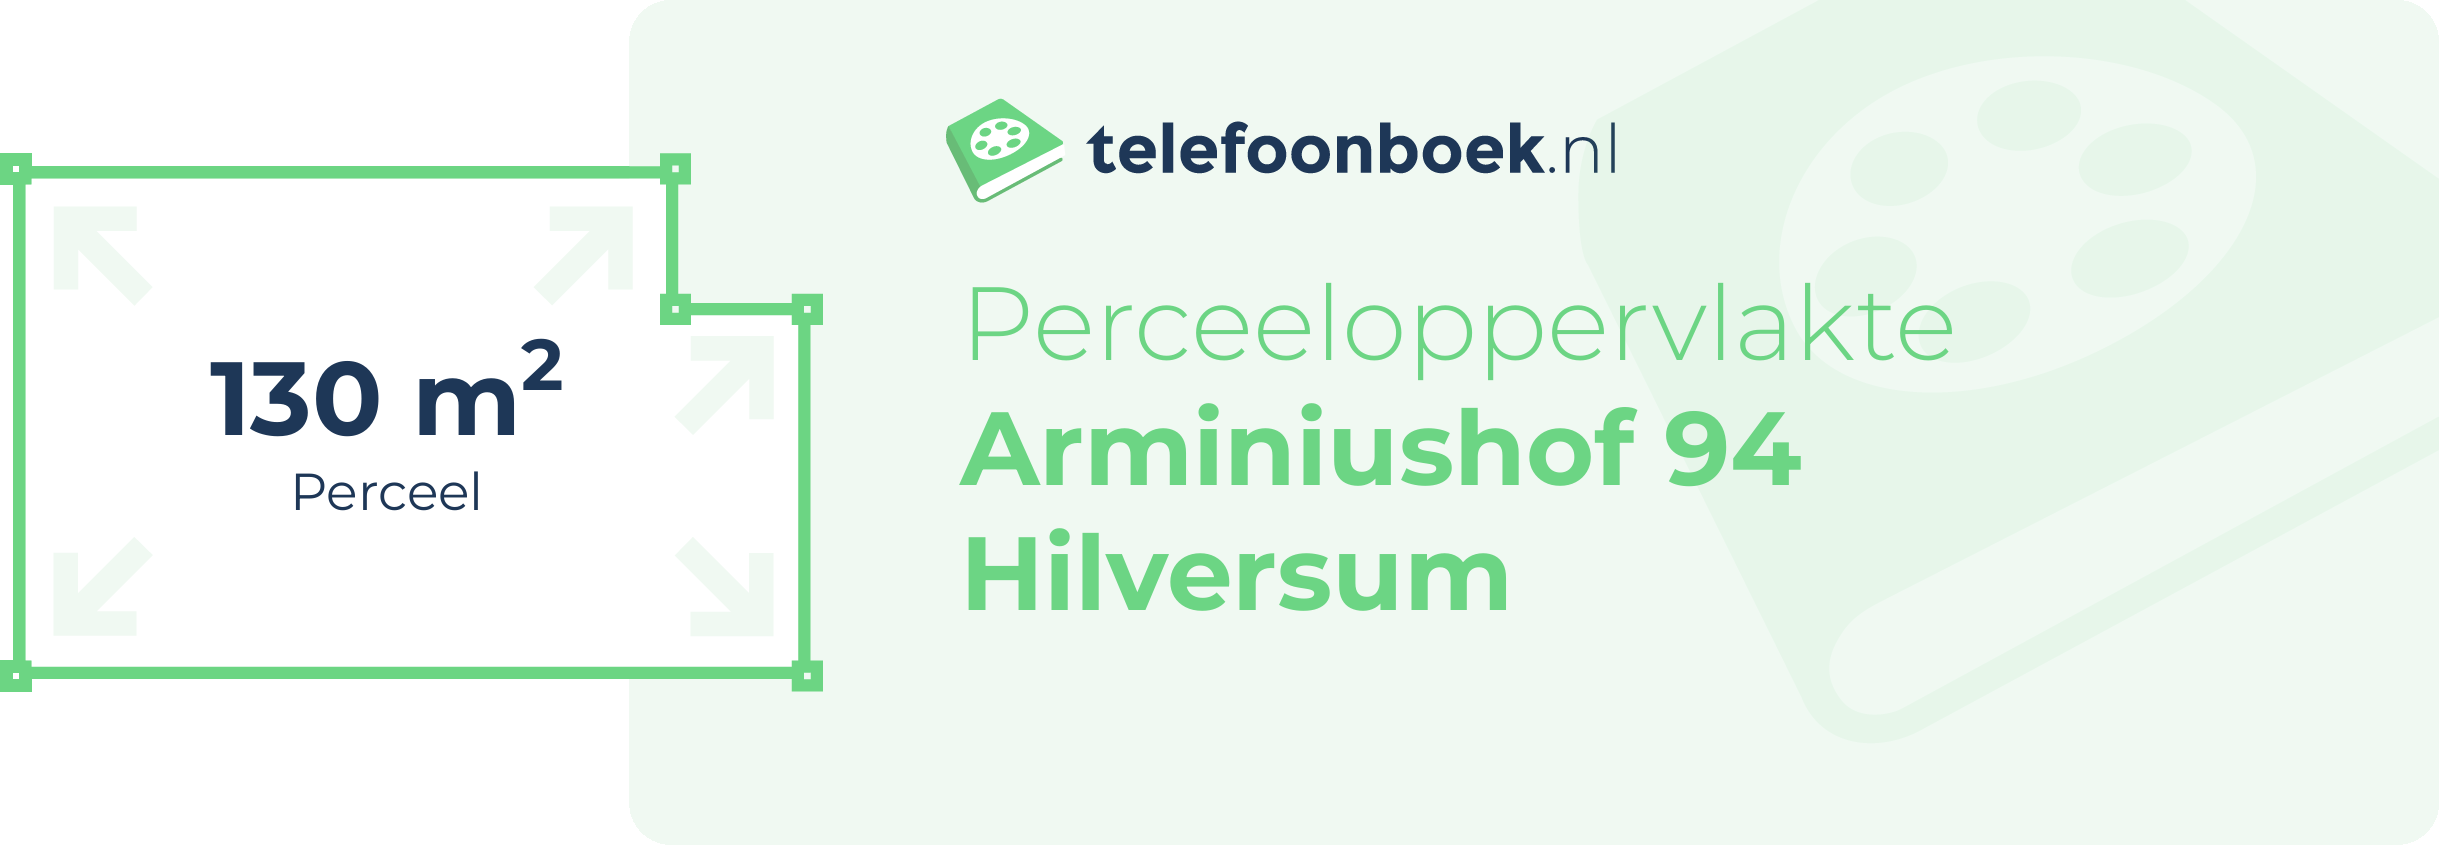 Perceeloppervlakte Arminiushof 94 Hilversum